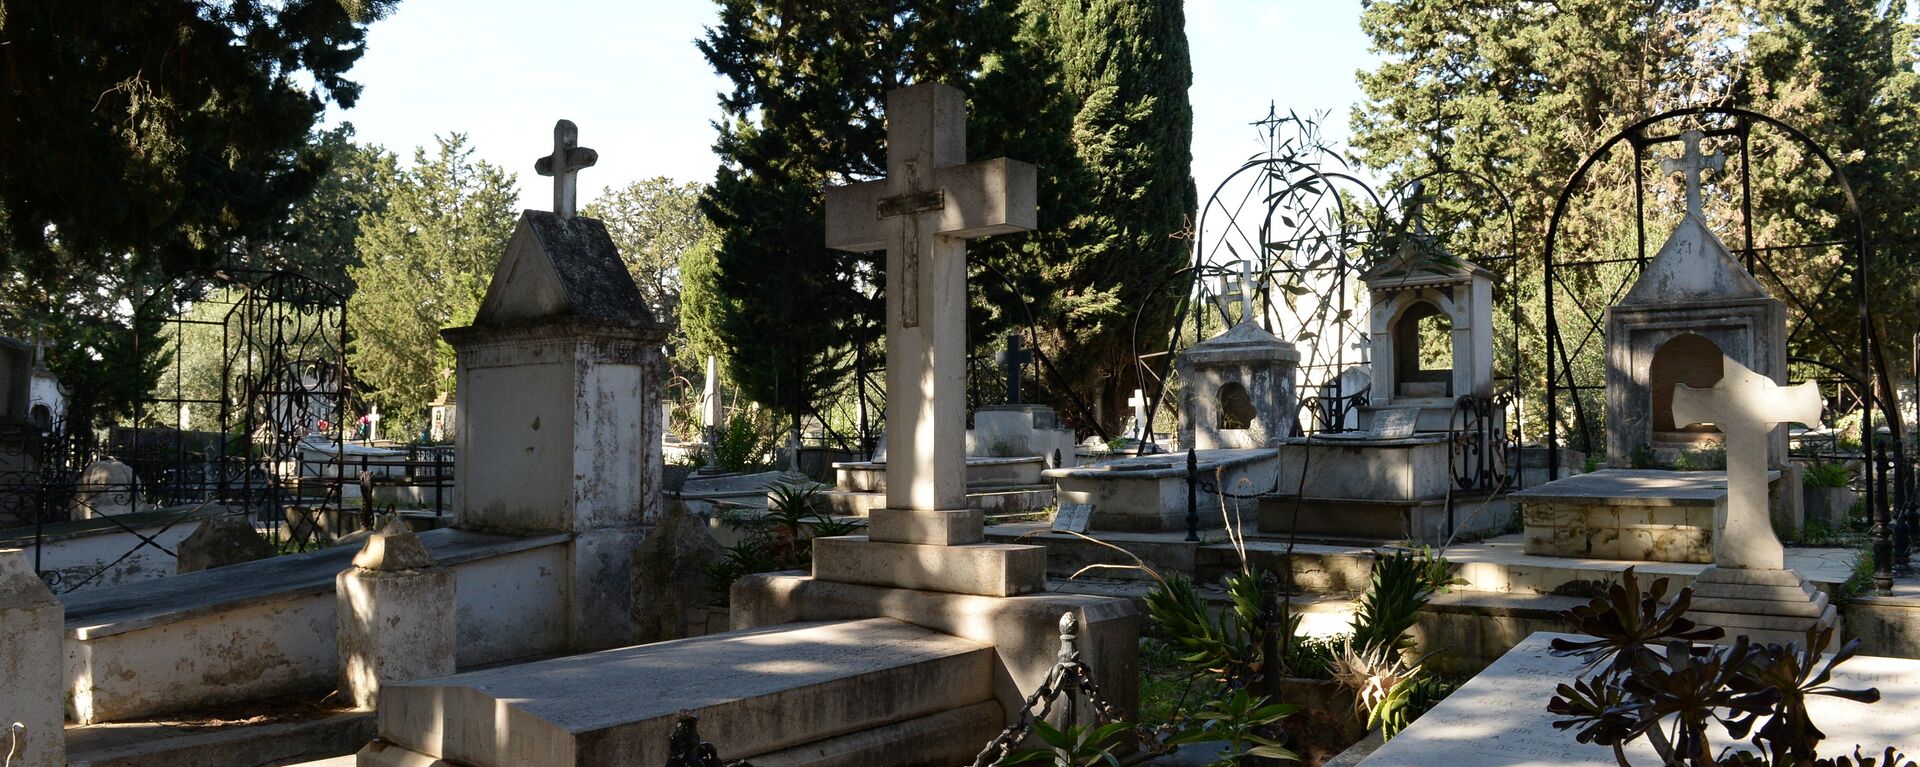 Cementerio - Sputnik Mundo, 1920, 15.04.2021